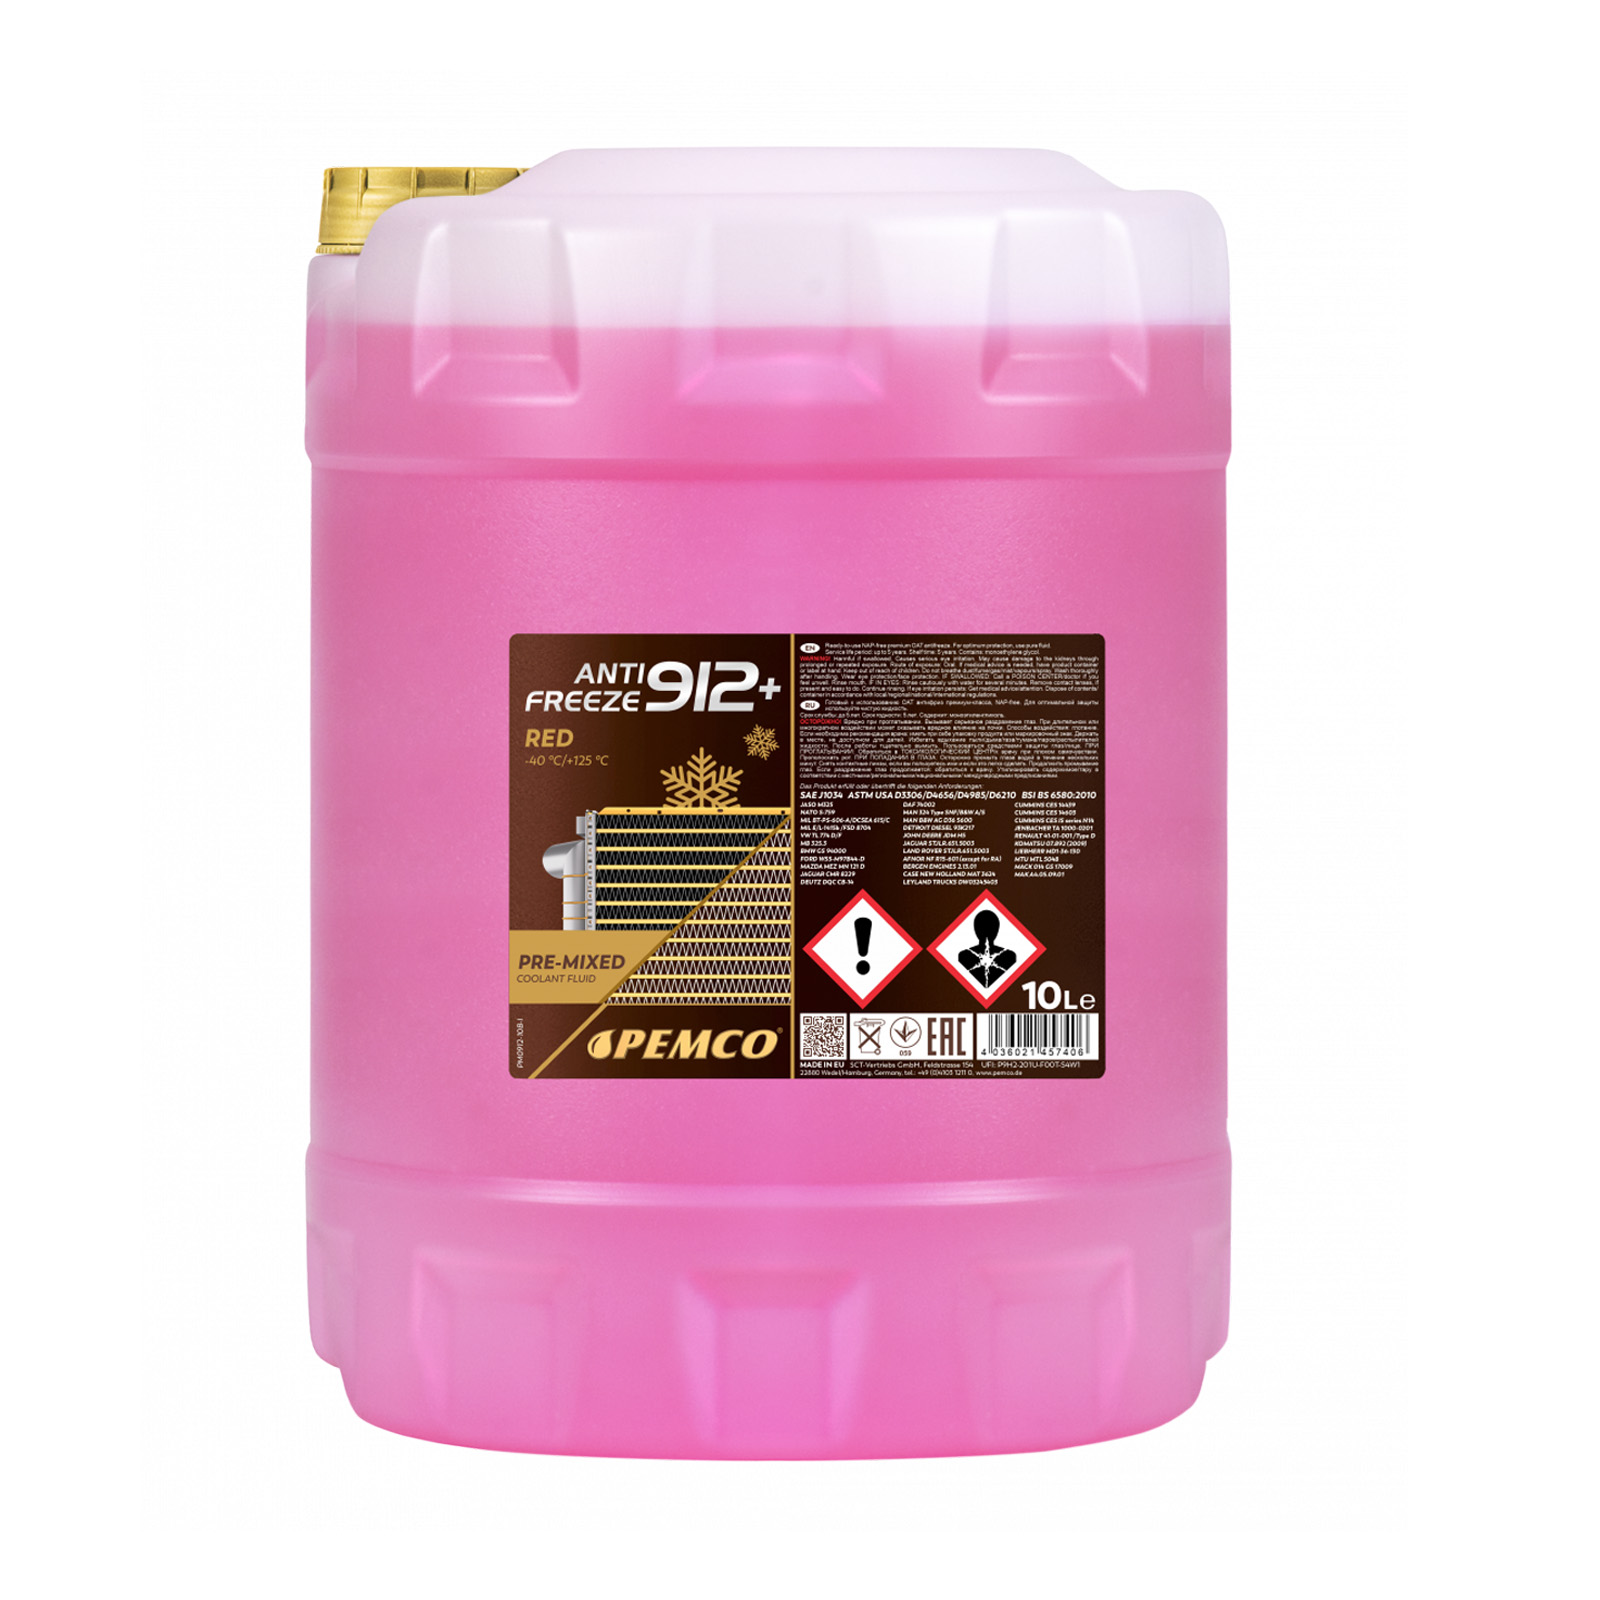 40 Liter PEMCO Anti Freeze 912+ Kühler Frostschutz bis -40C rosa rot